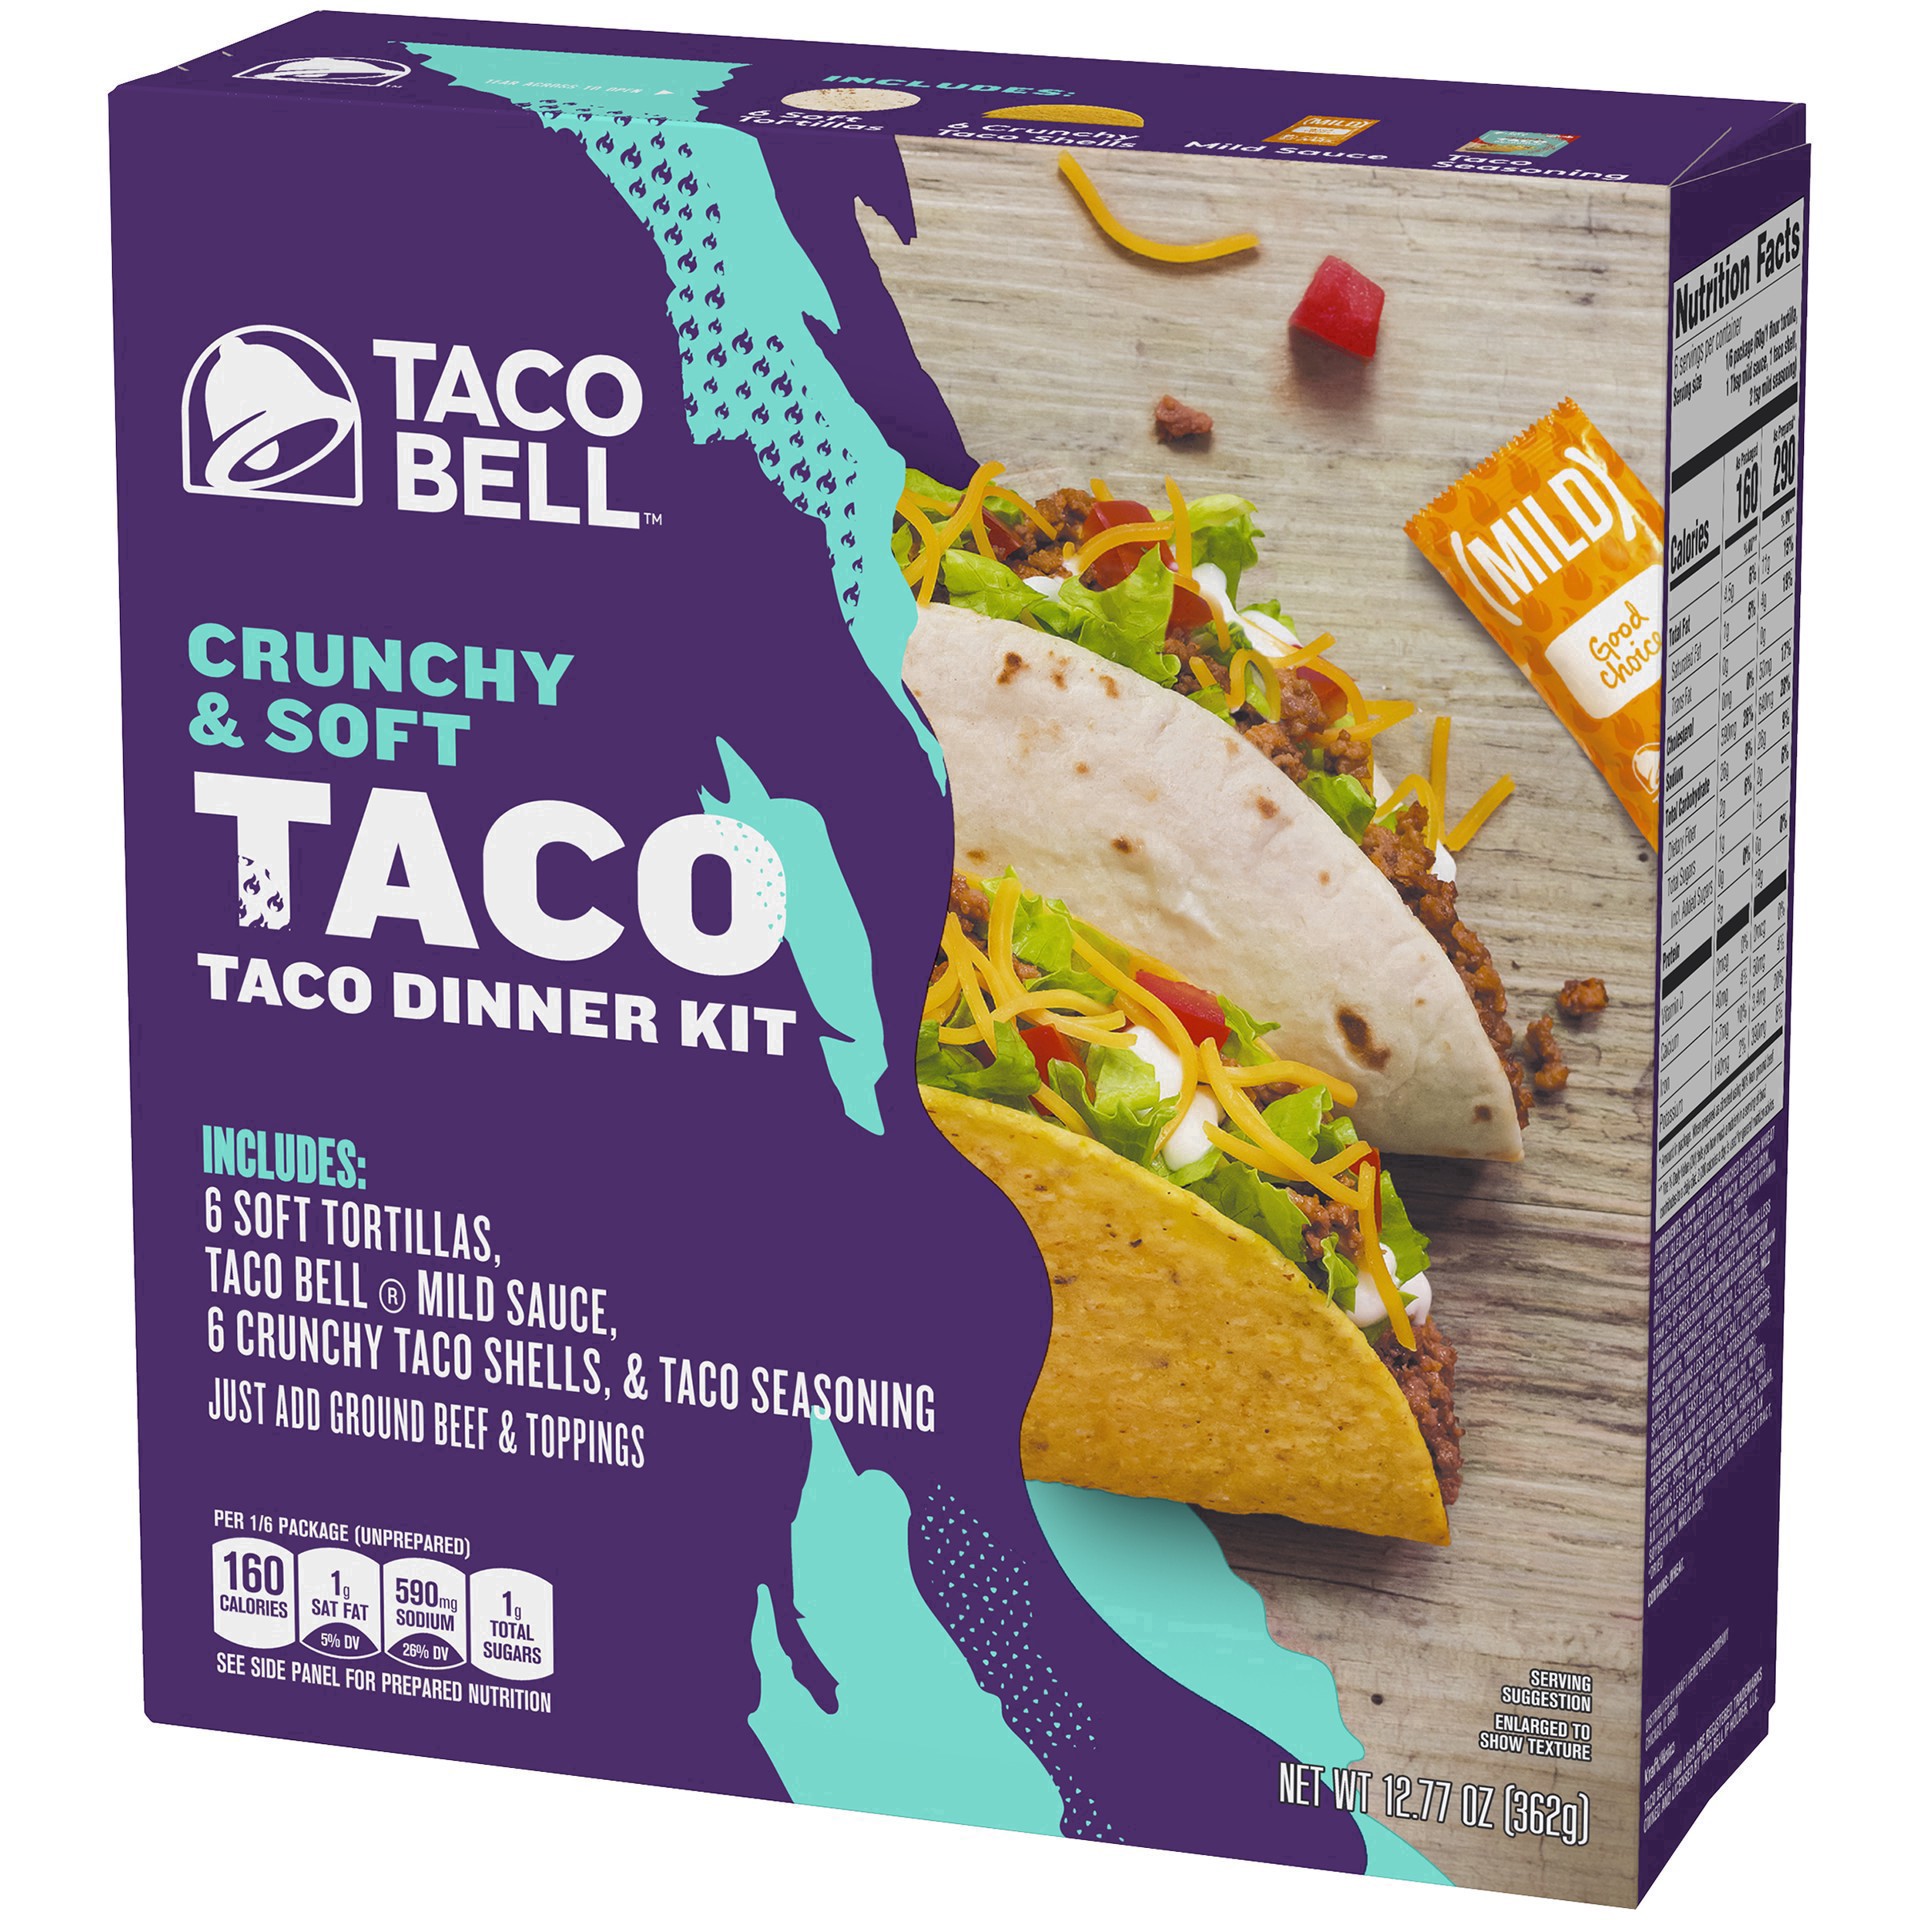 slide 2 of 101, Taco Bell Crunchy & Soft Taco Cravings Kit with 6 Soft Tortillas, 6 Crunchy Taco Shells, Taco Bell Mild Sauce & Seasoning, 12.77 oz Box, 1 ea